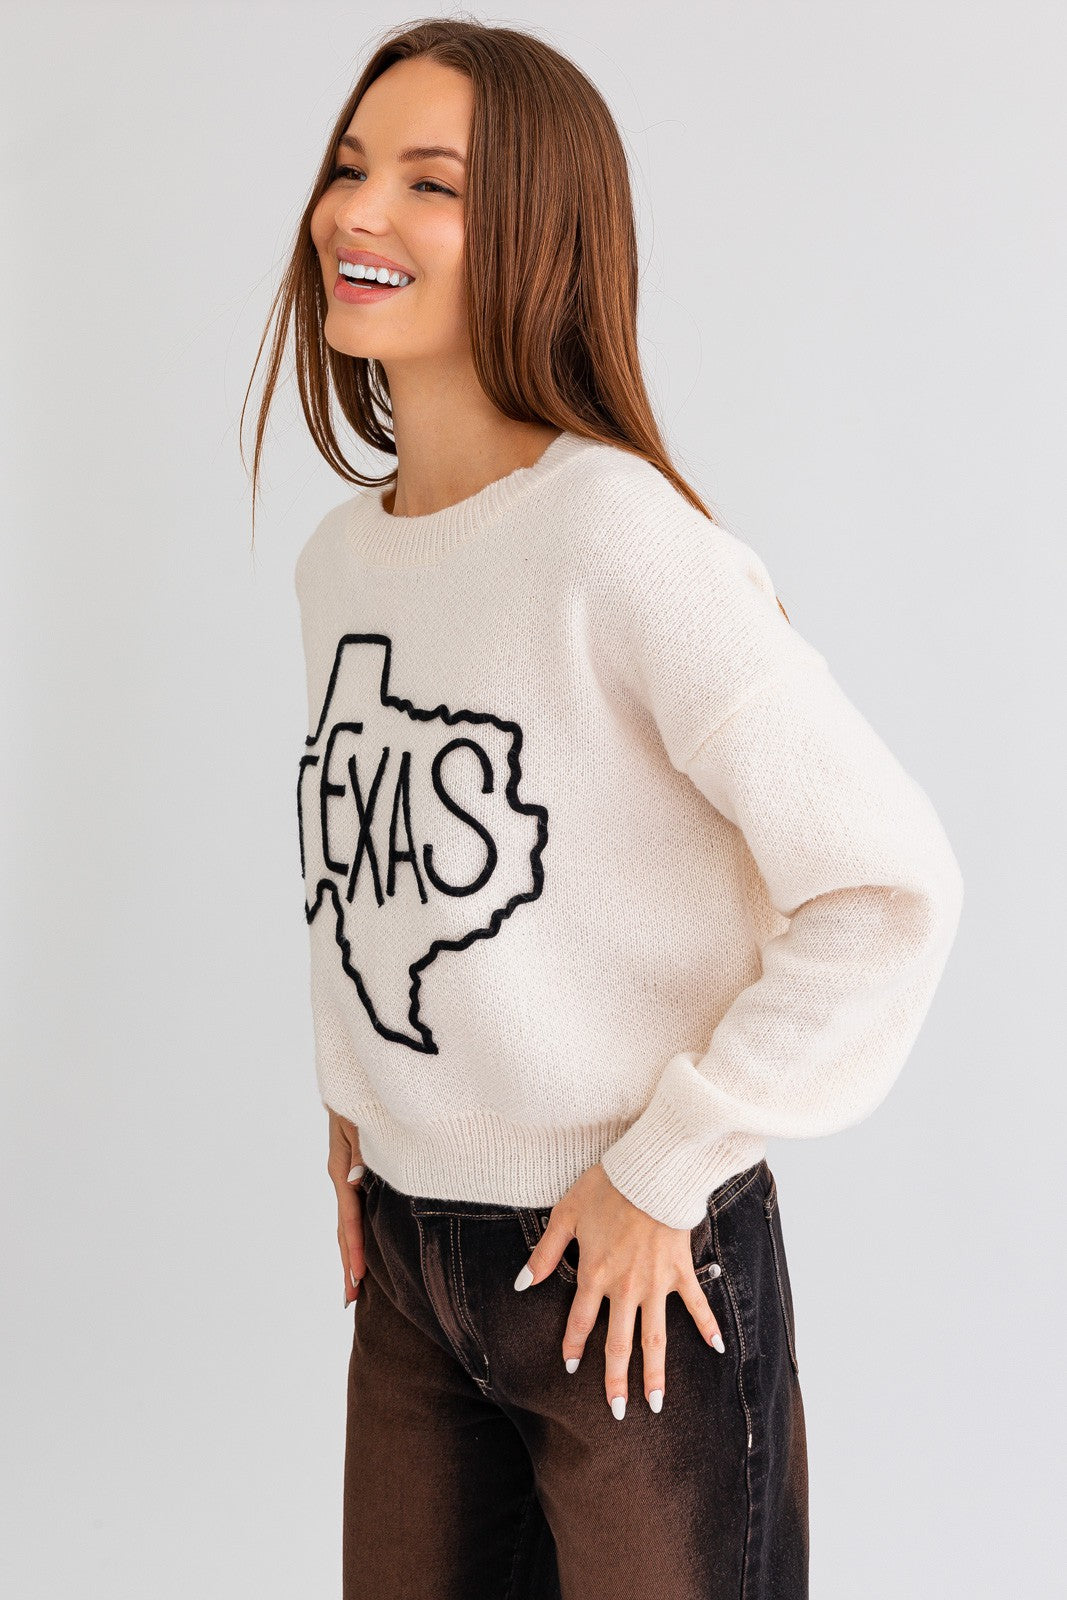 Texas Line Art Sweater